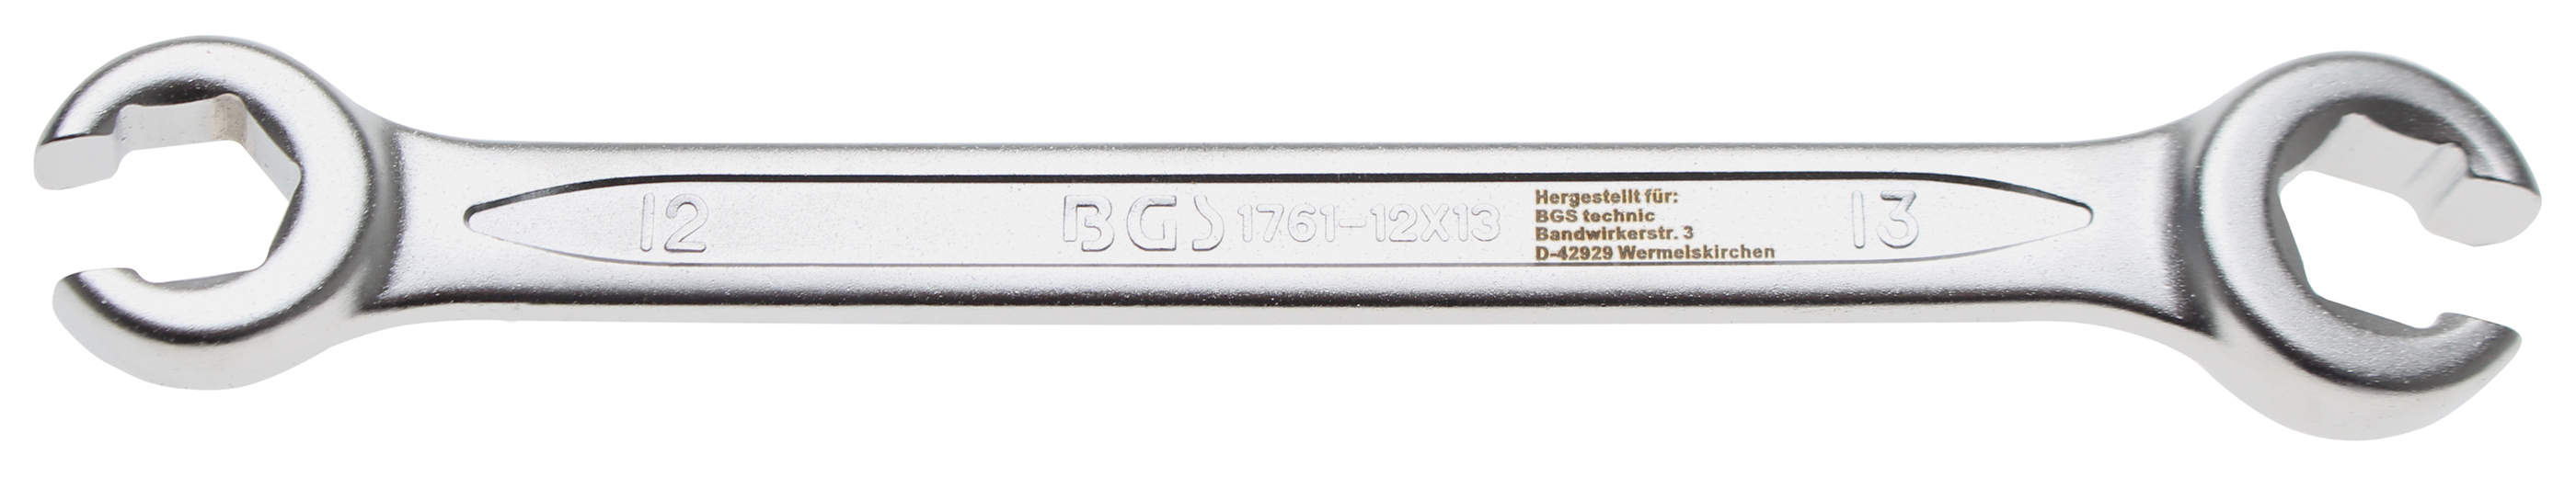 BGS 1761-12x13 Cheie conducte, 12 x 13 mm